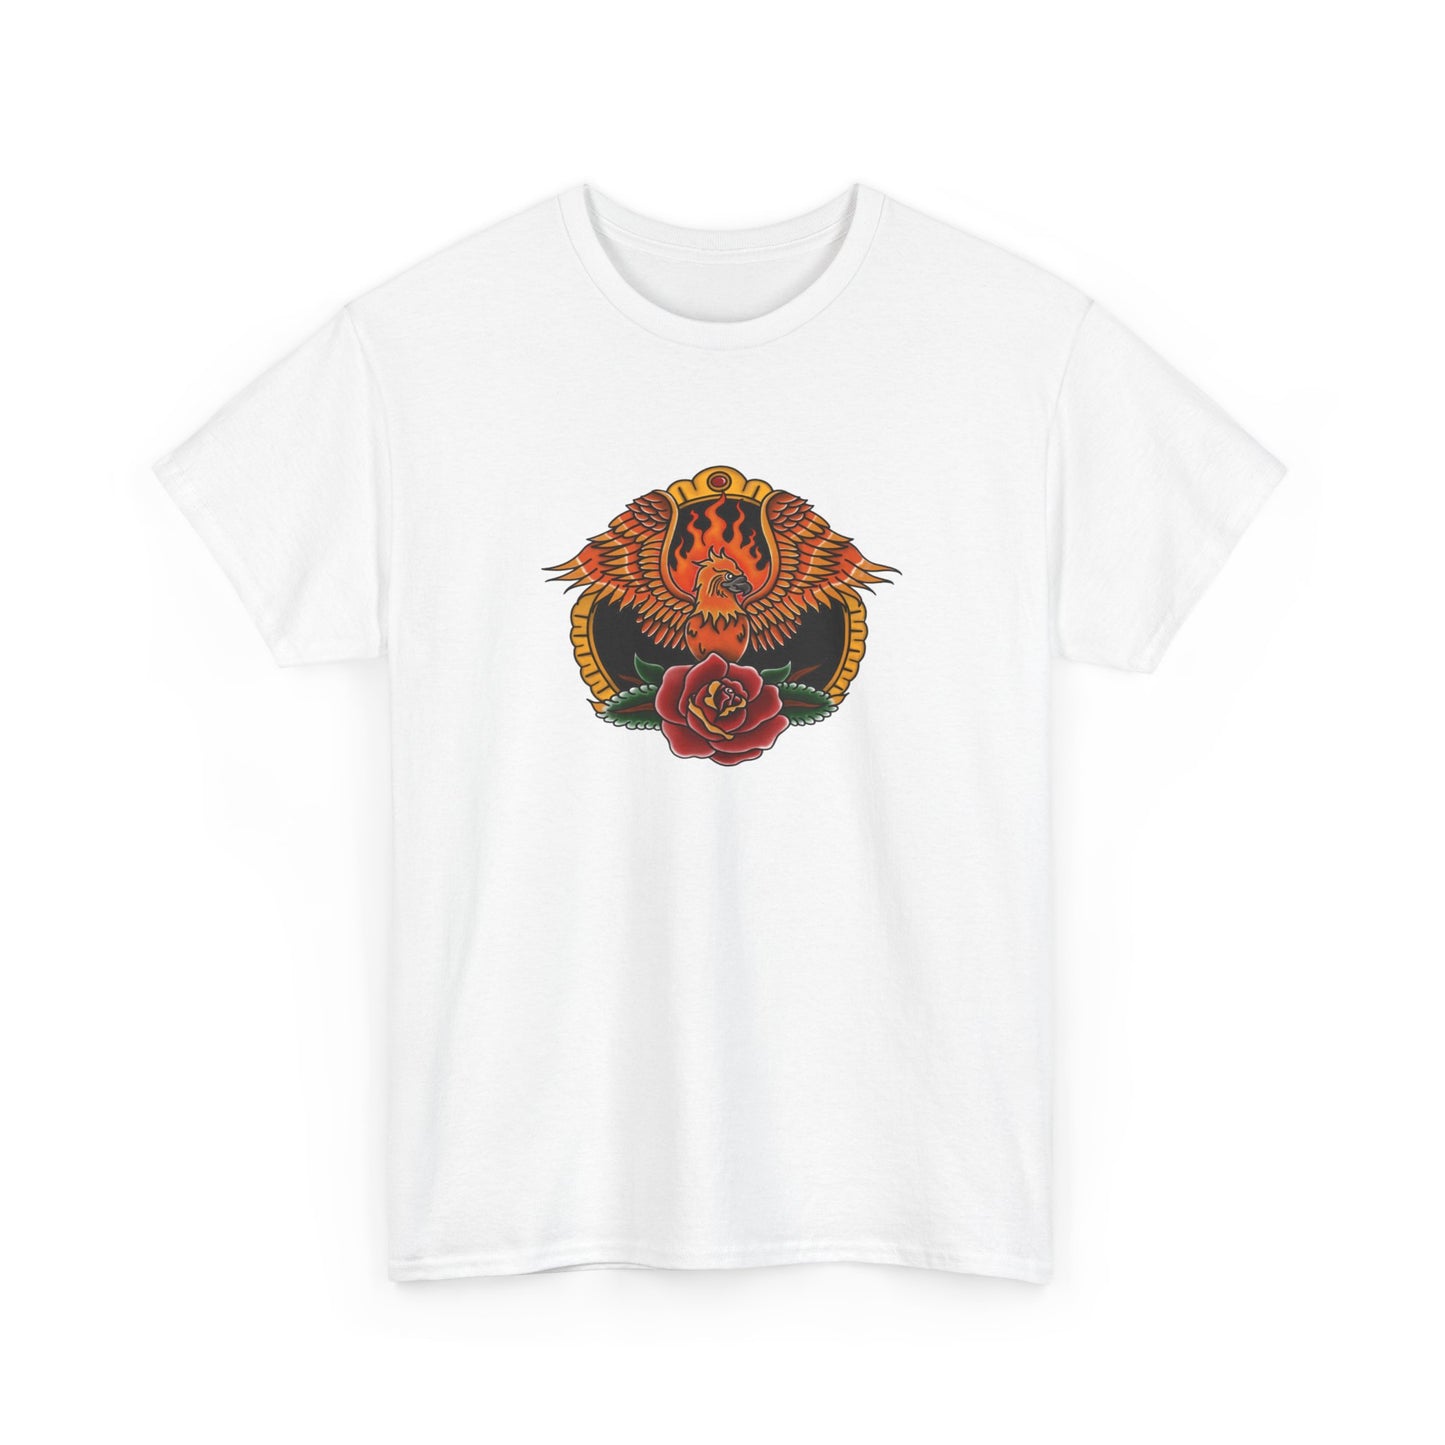 Phoenix Shirt